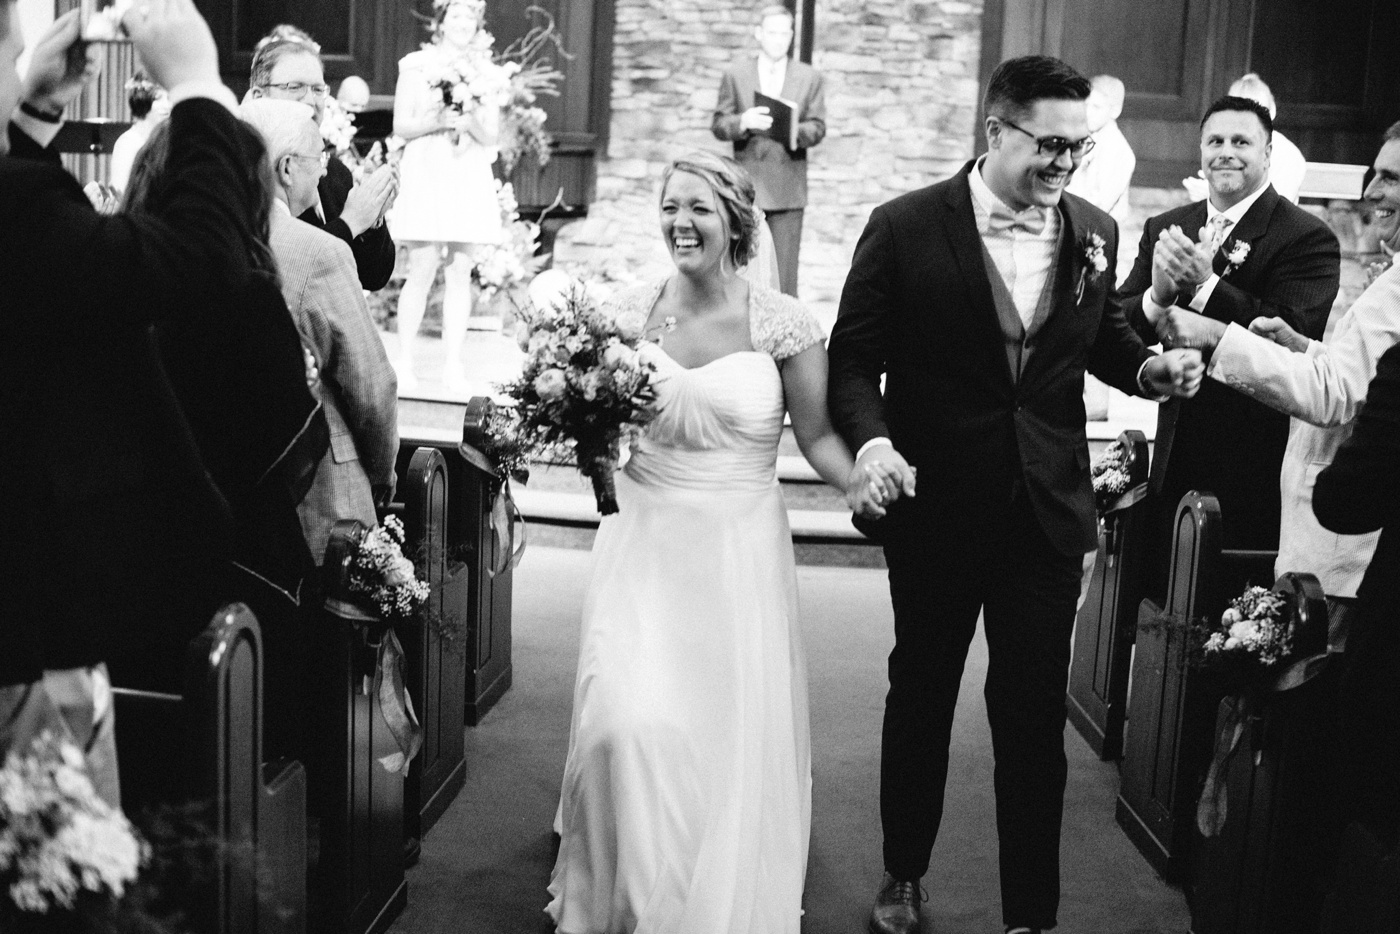 Kristen + John - Reading Pennsylvania Wedding Photographer - Alison Dunn Photography photo-79